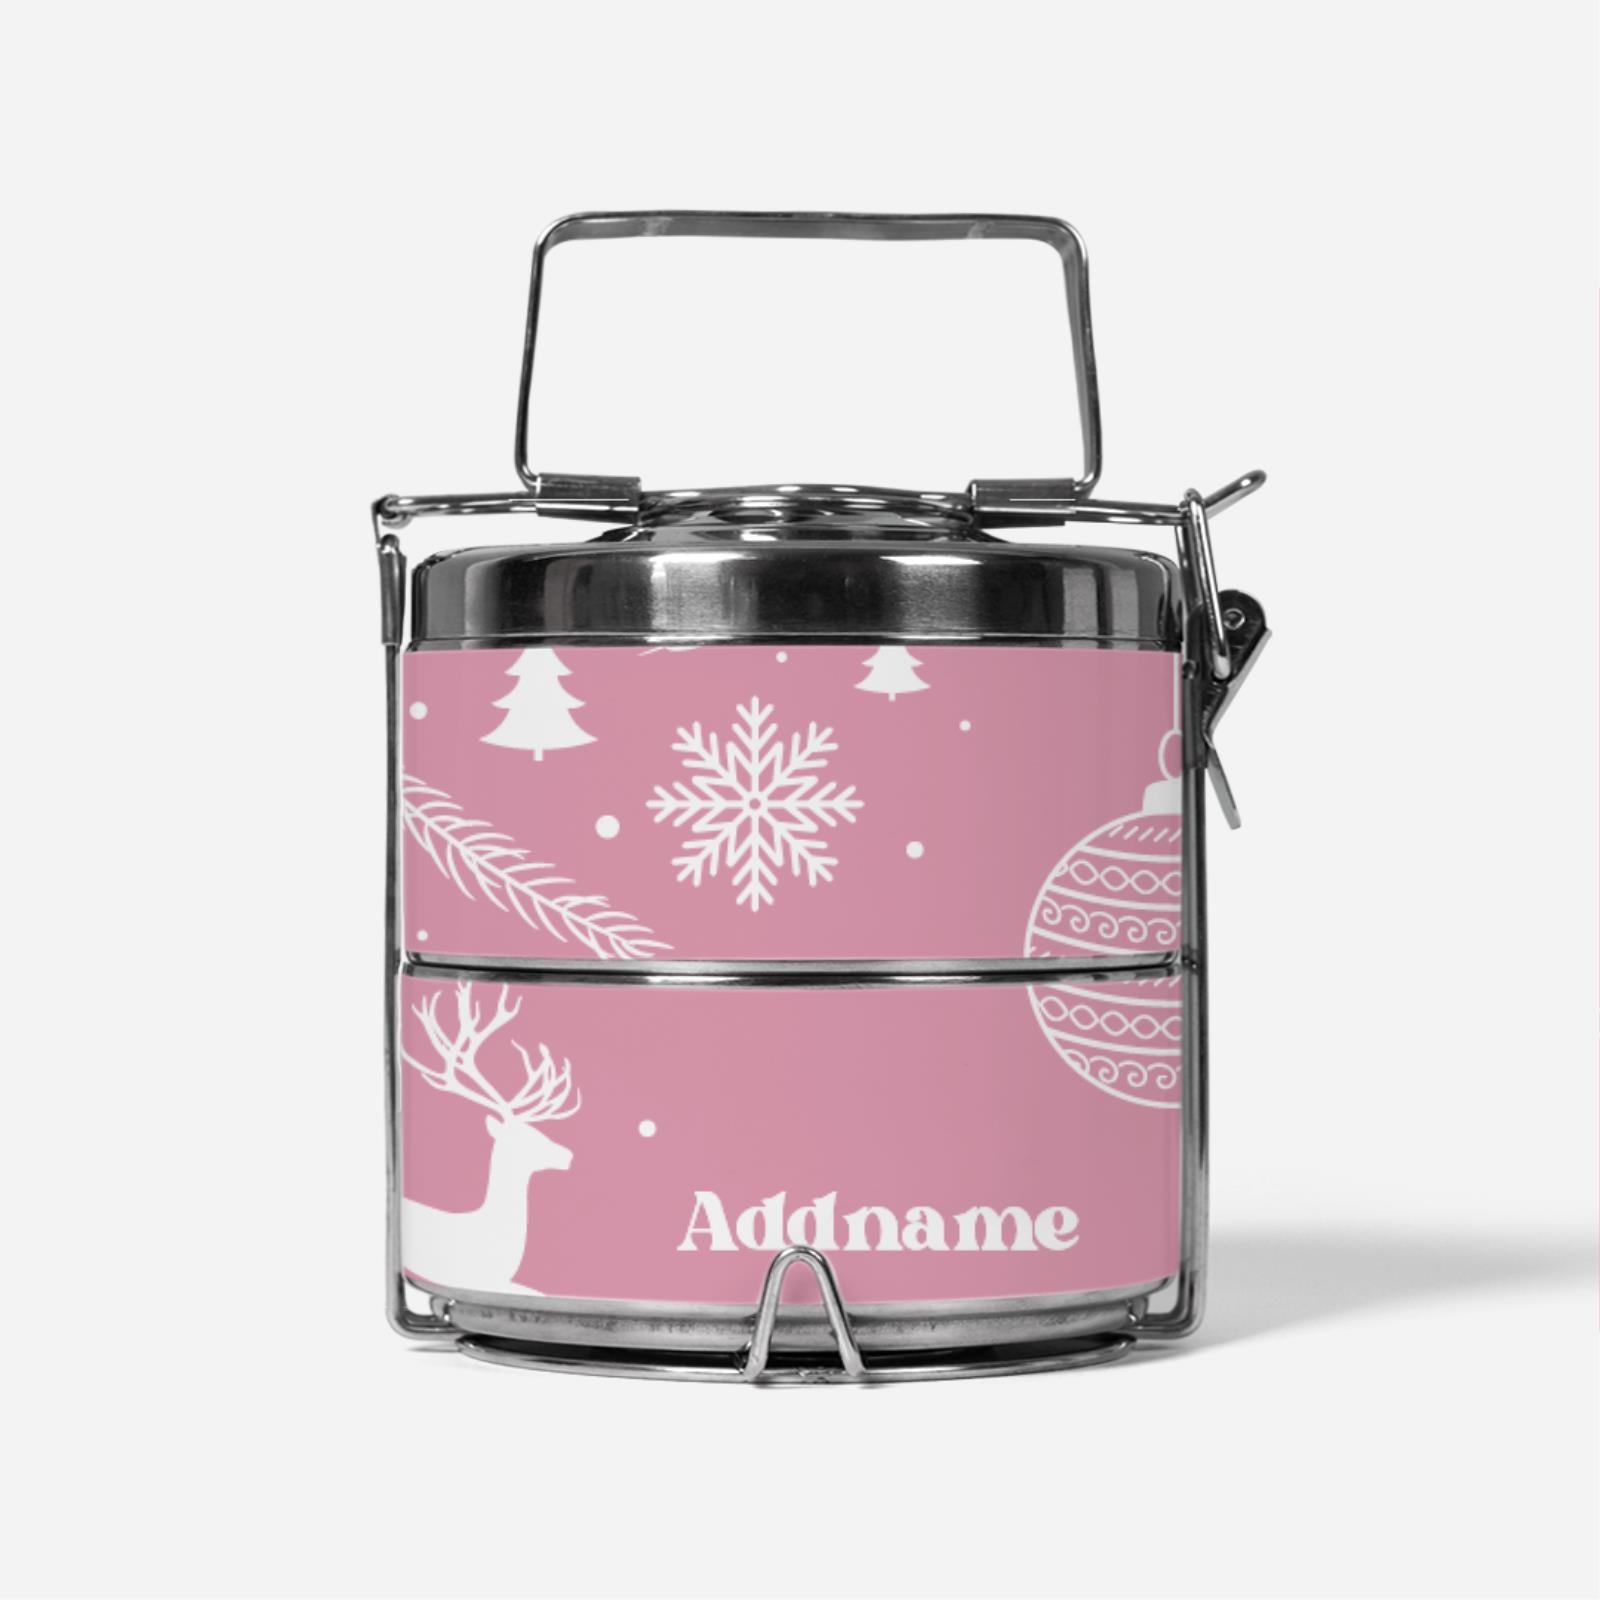 Christmas Series Premium Two Tier Tiffin Carrier - Jubilant Reindeers Light Pink